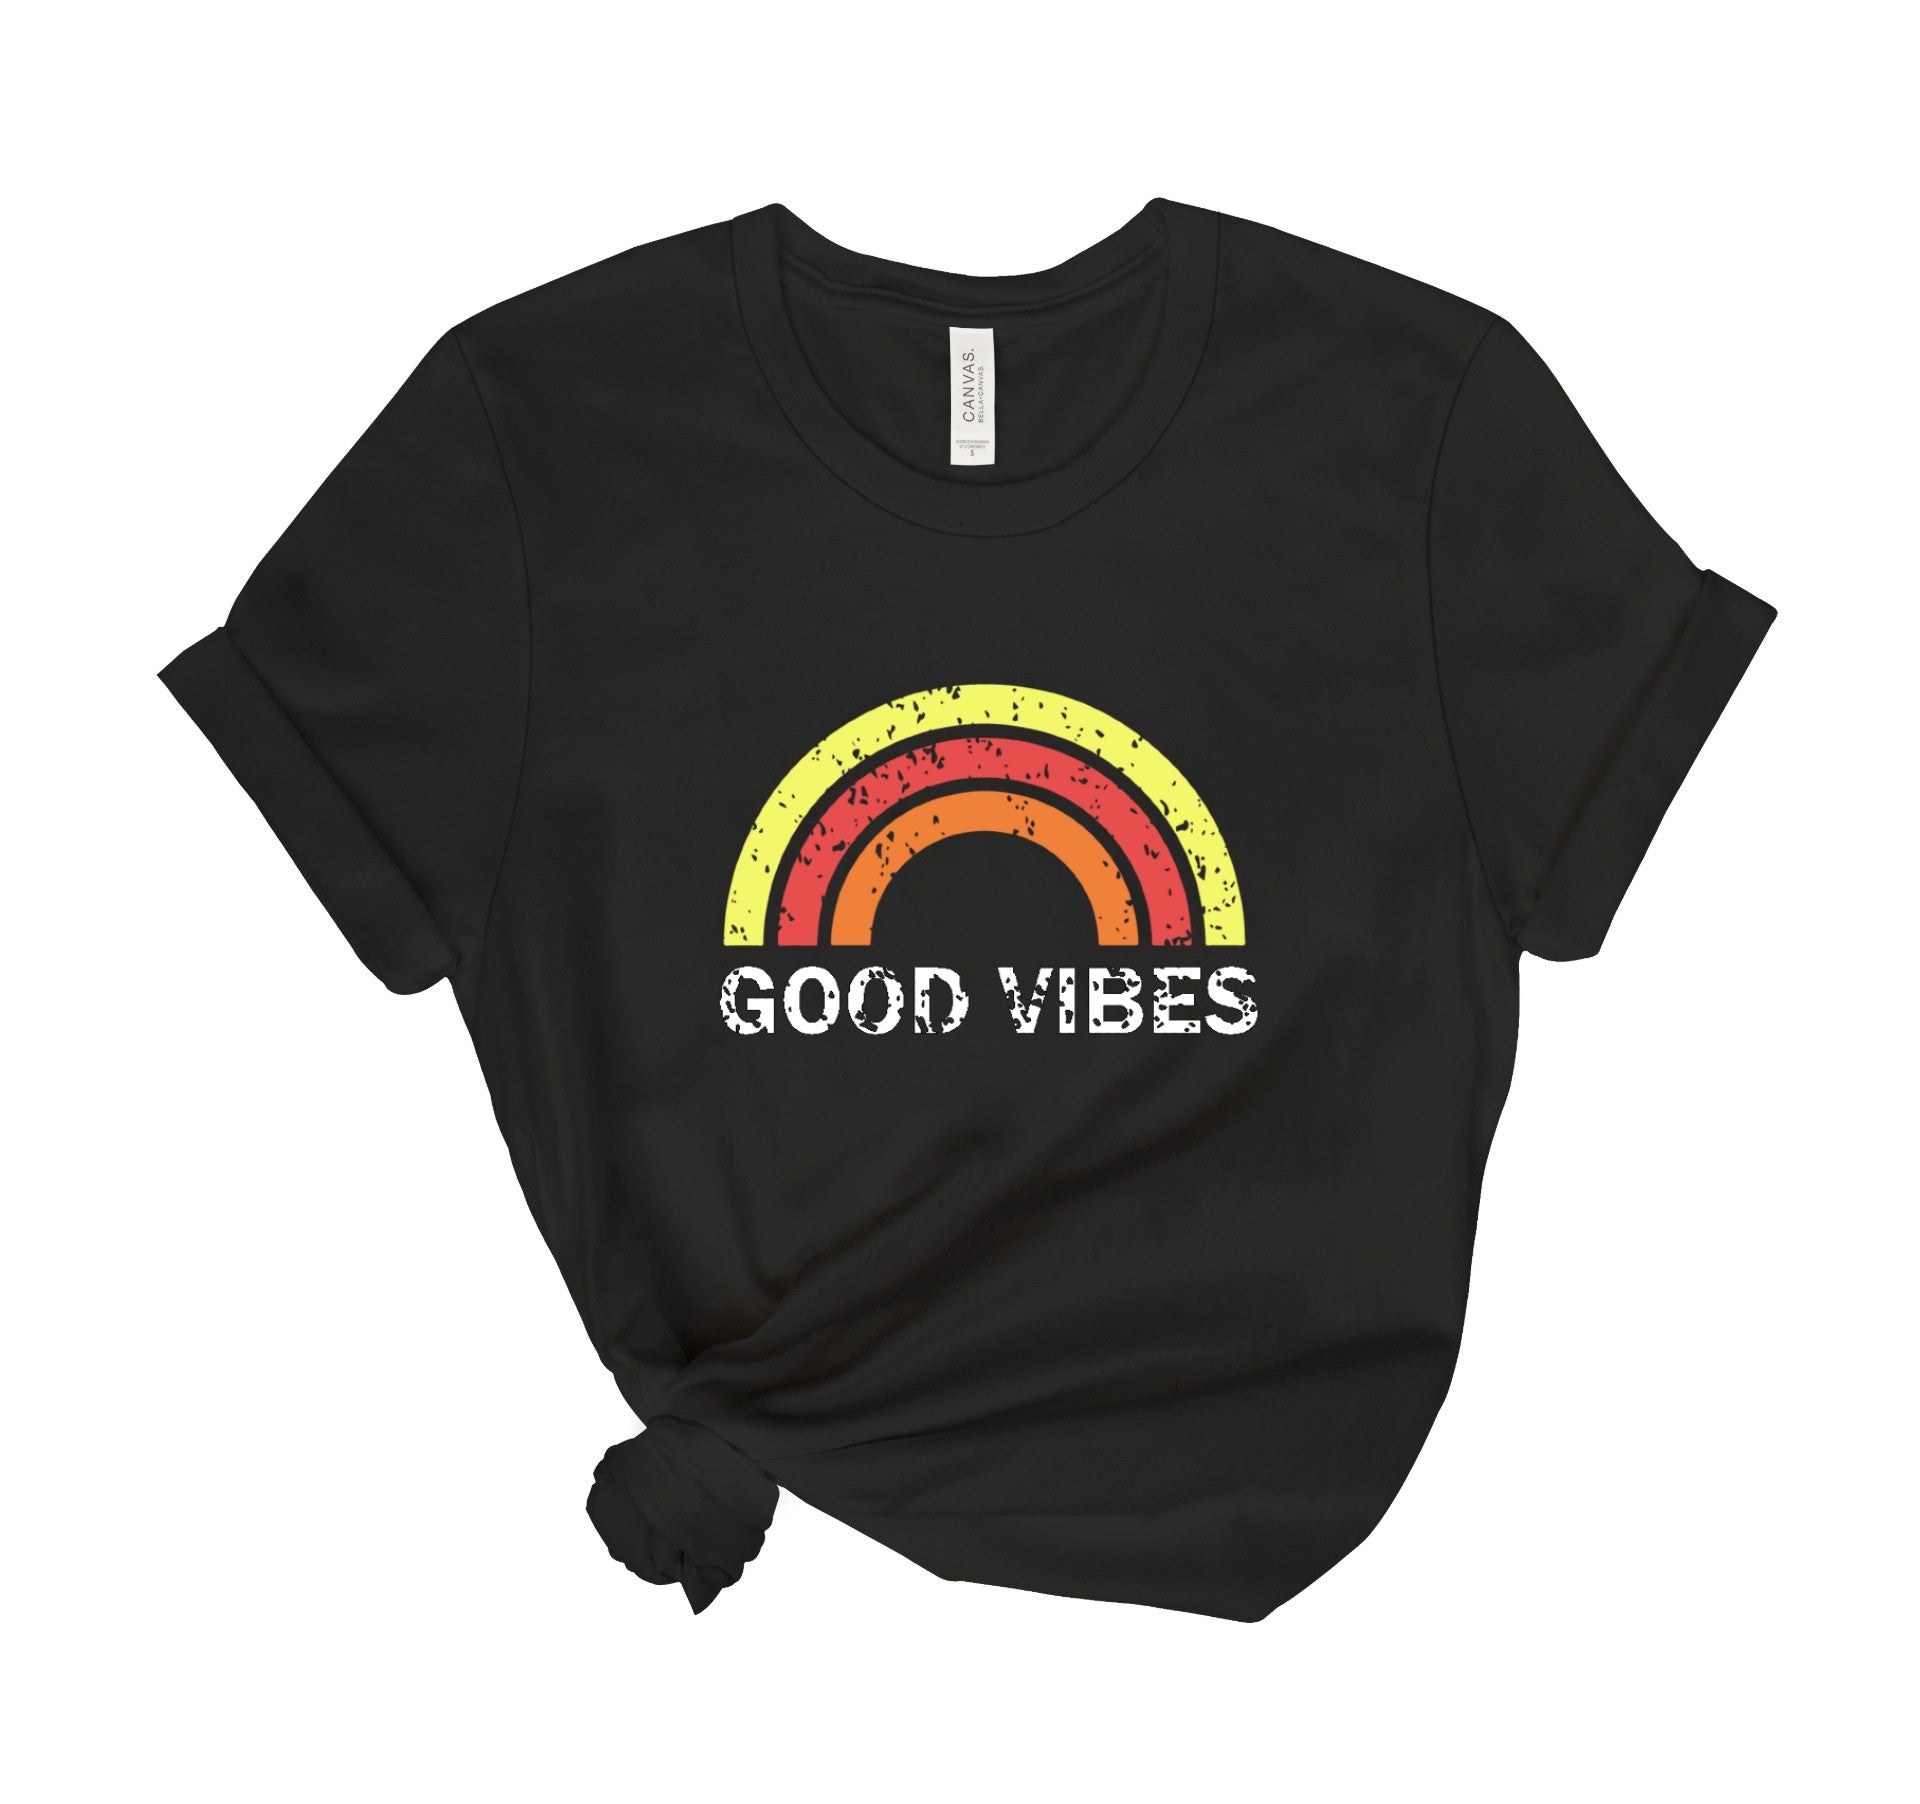 Good Vibes Distressed Tee Shirt